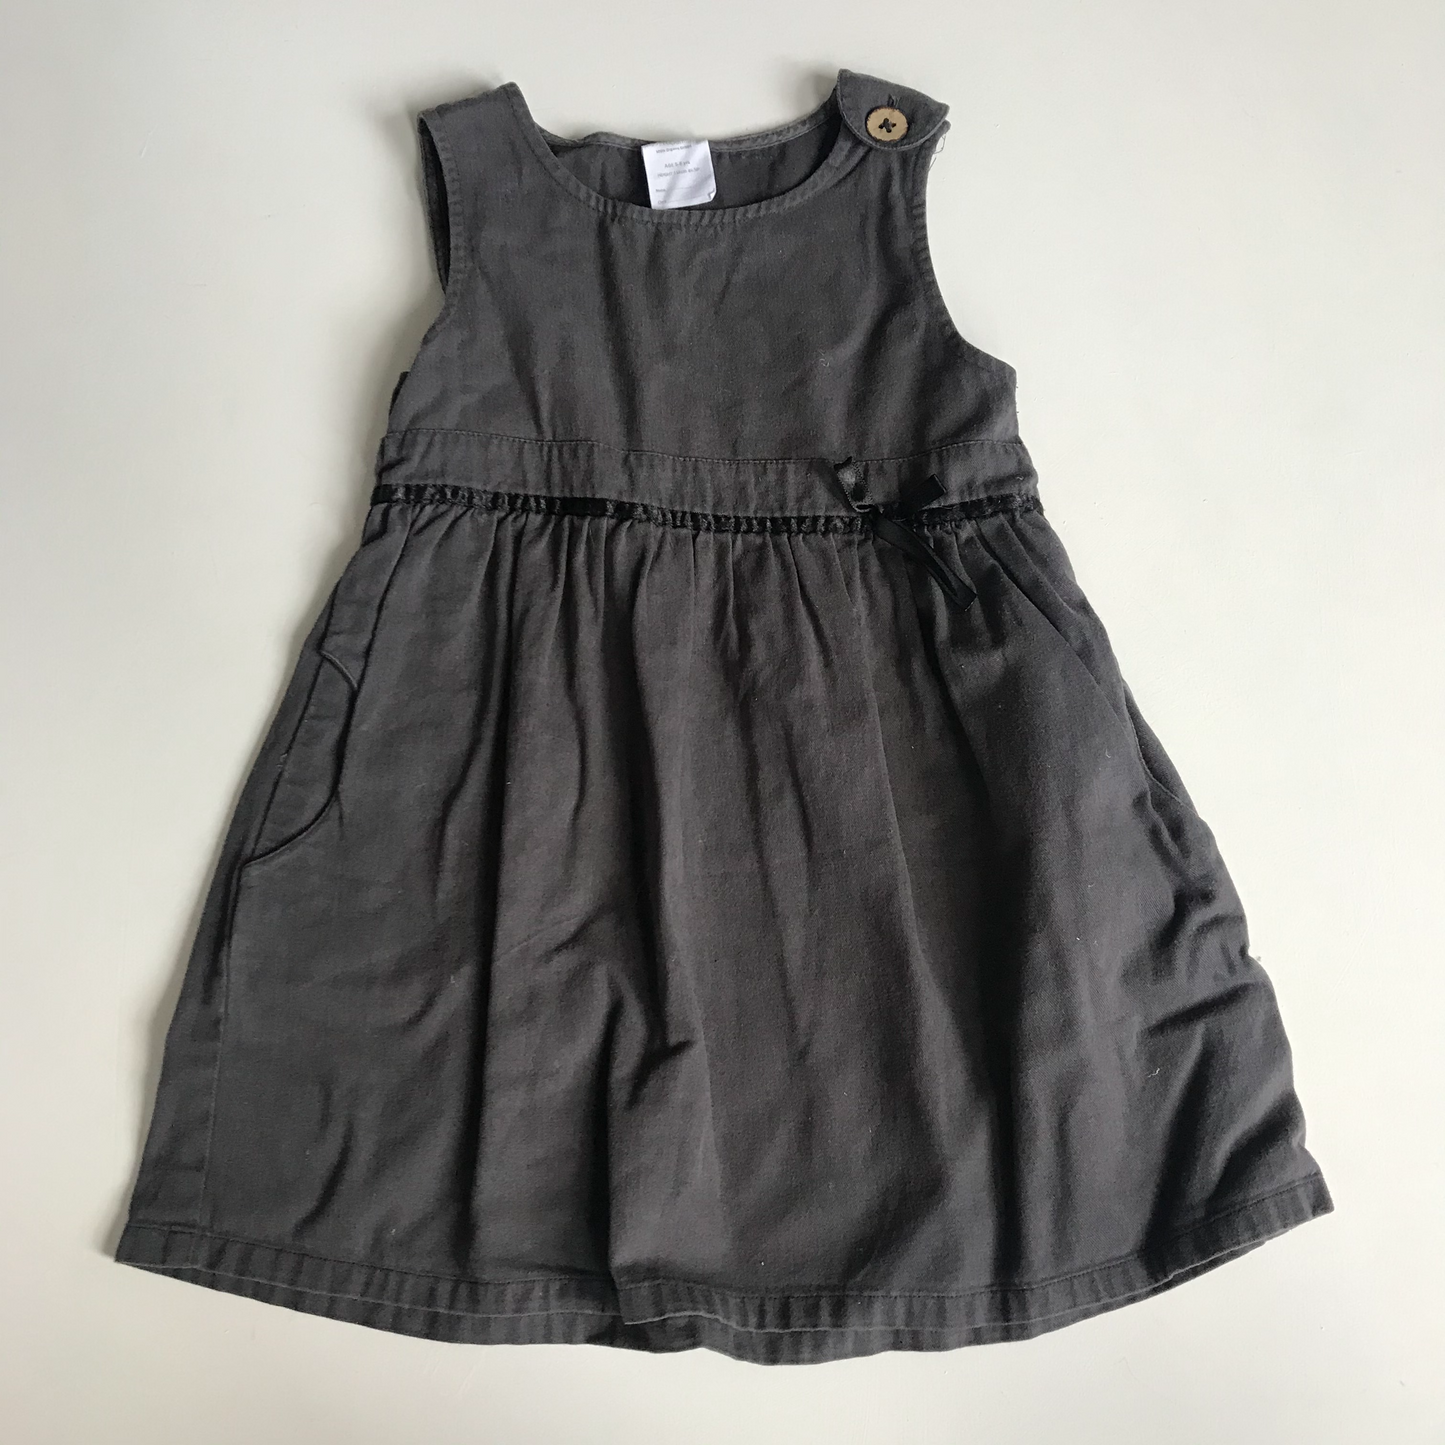 Dress - Grey - Age 5